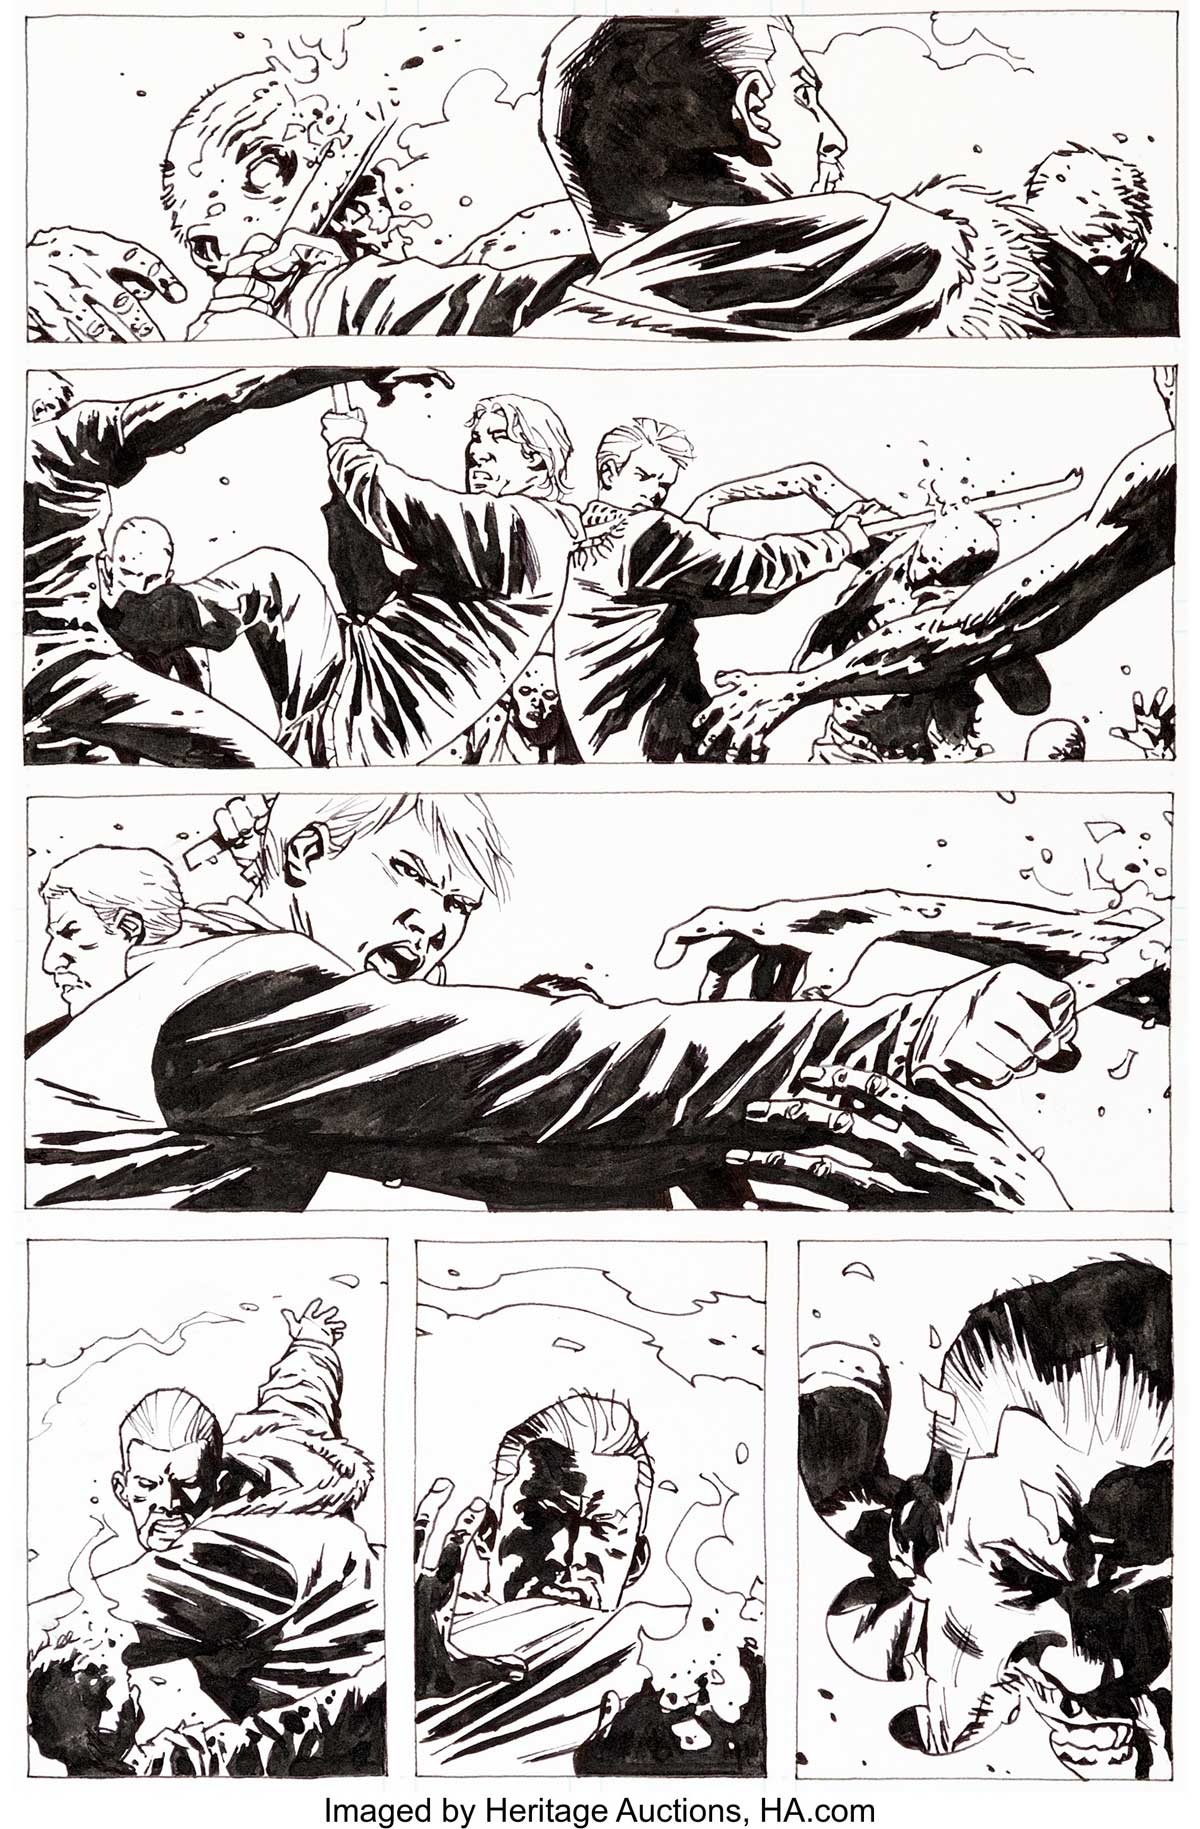 Charlie Adlard The Walking Dead #82 Story Page 7 Original Art (Image, 2011). The gang goes on a zombie slugfest